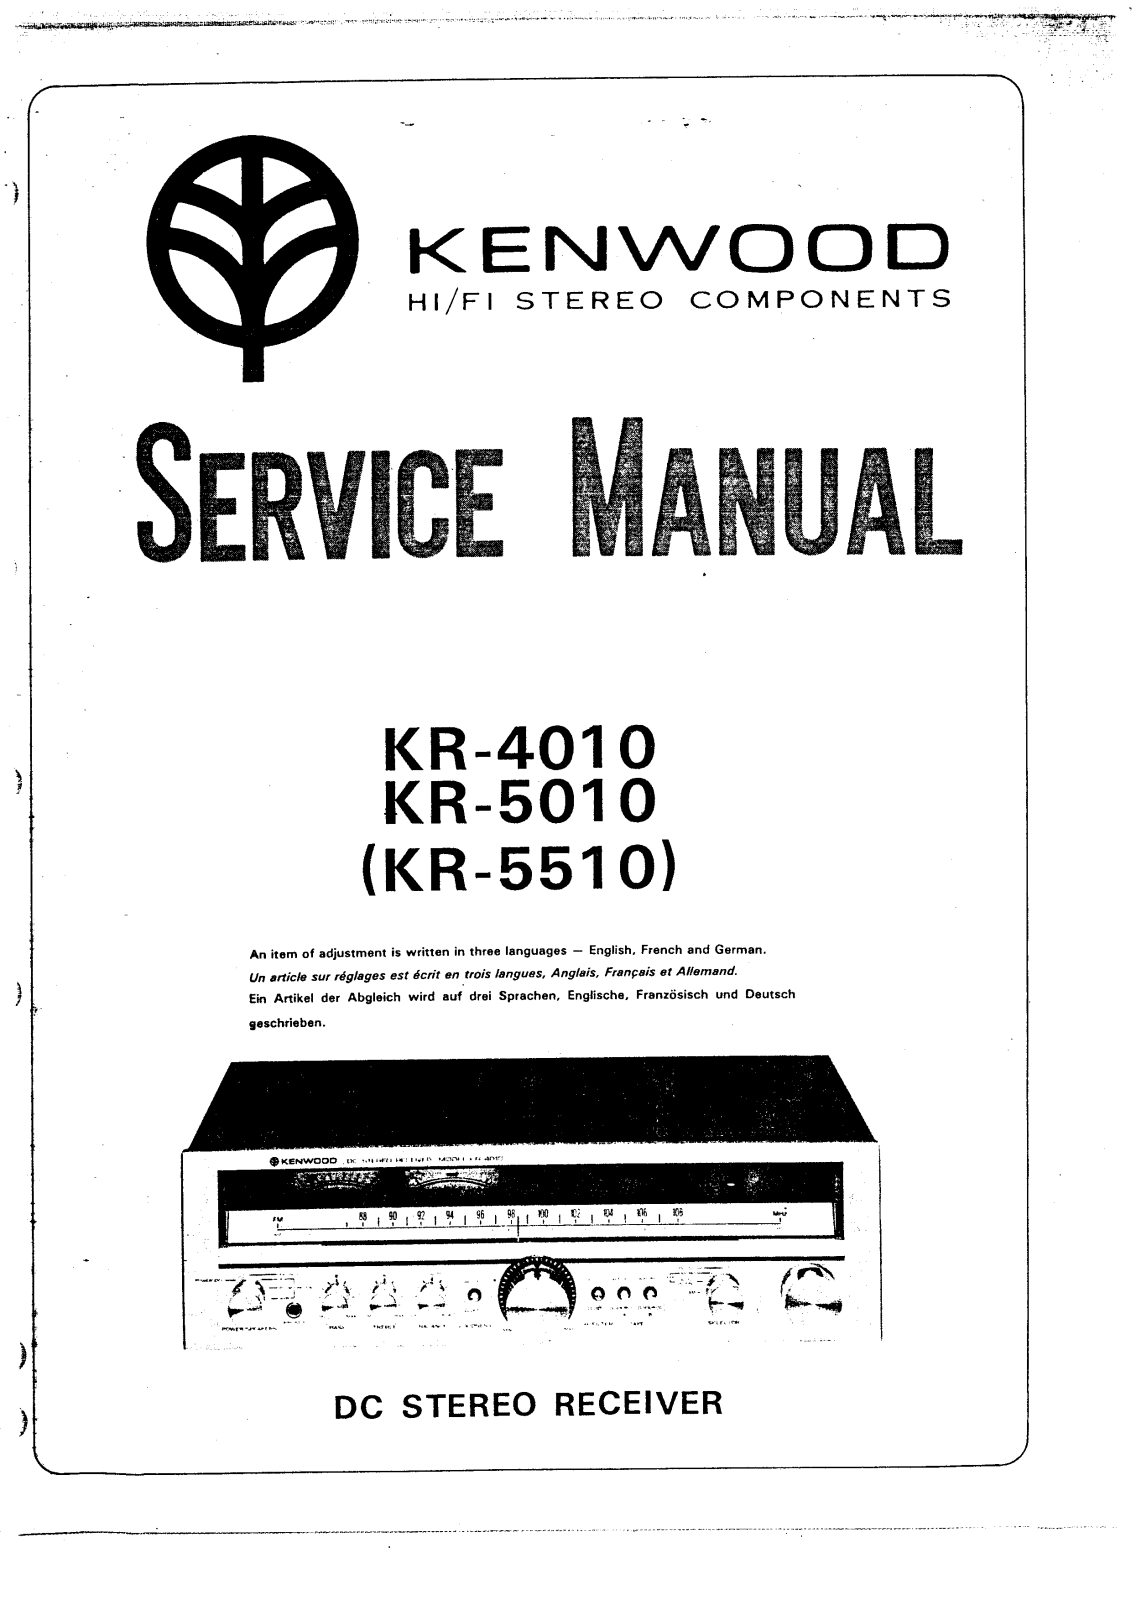 Kenwood KR-4010, KR-5010, KR-5510 Service manual